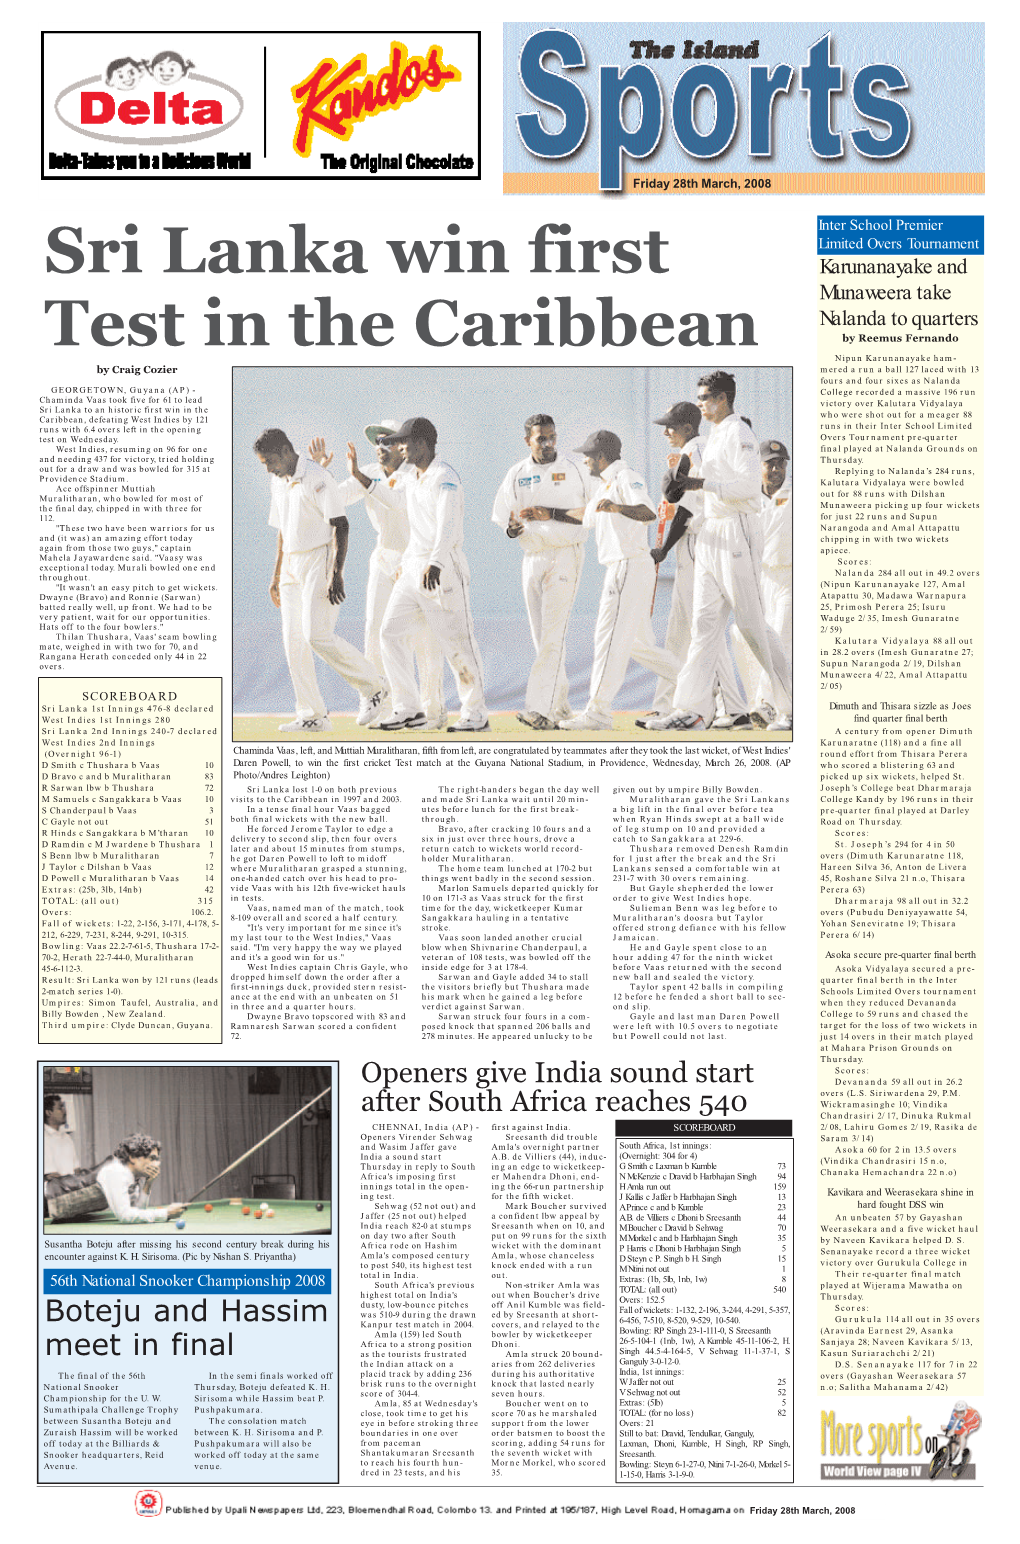 Sri Lanka Win First Test in the Caribbean